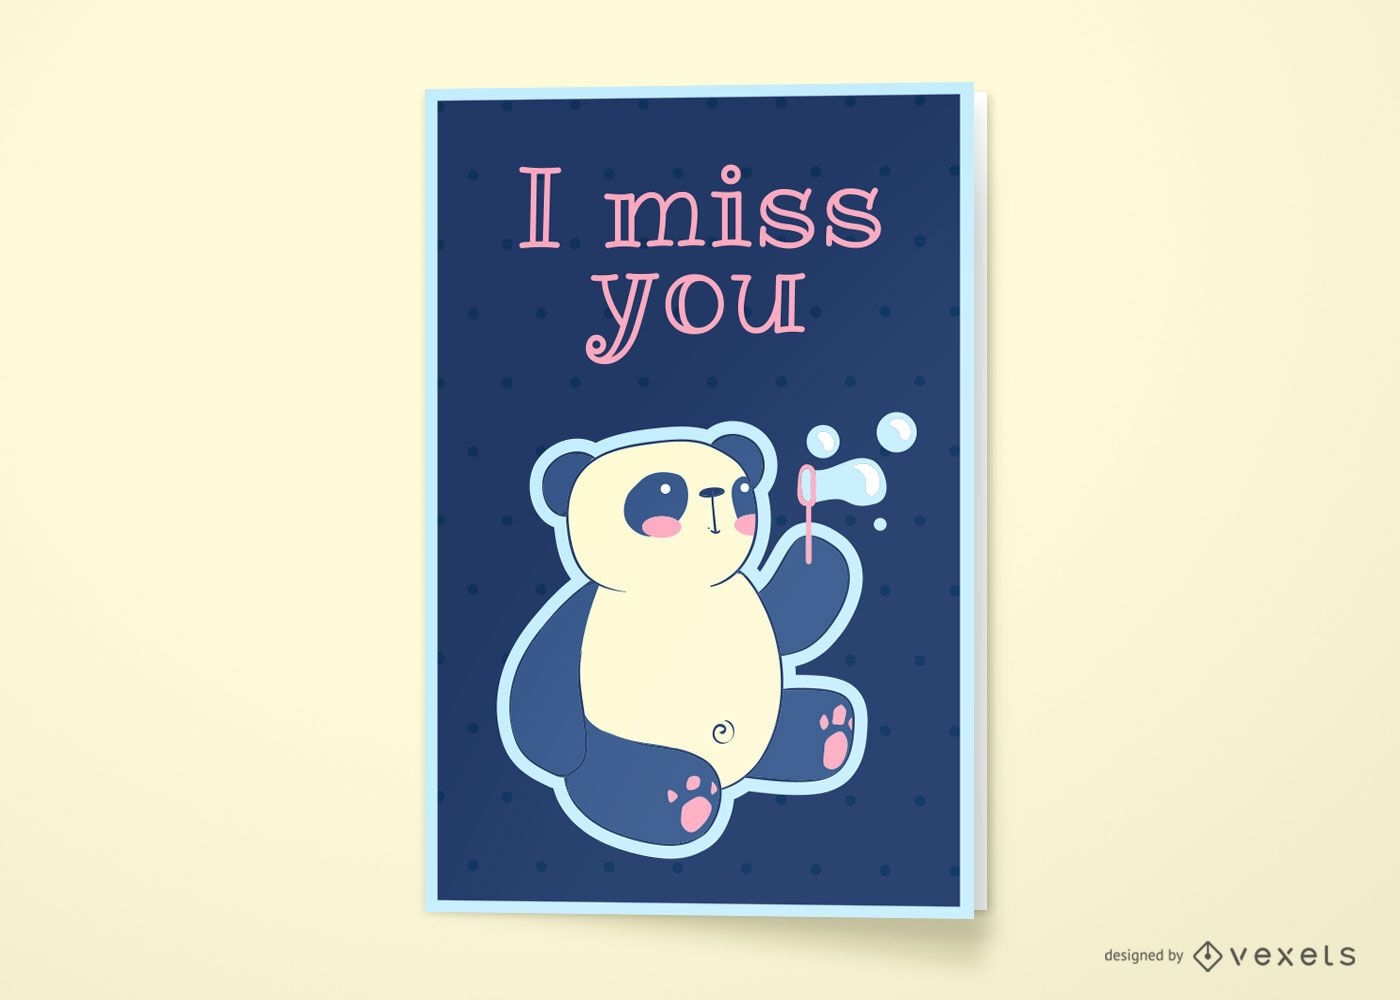 I miss you panda greeting card design